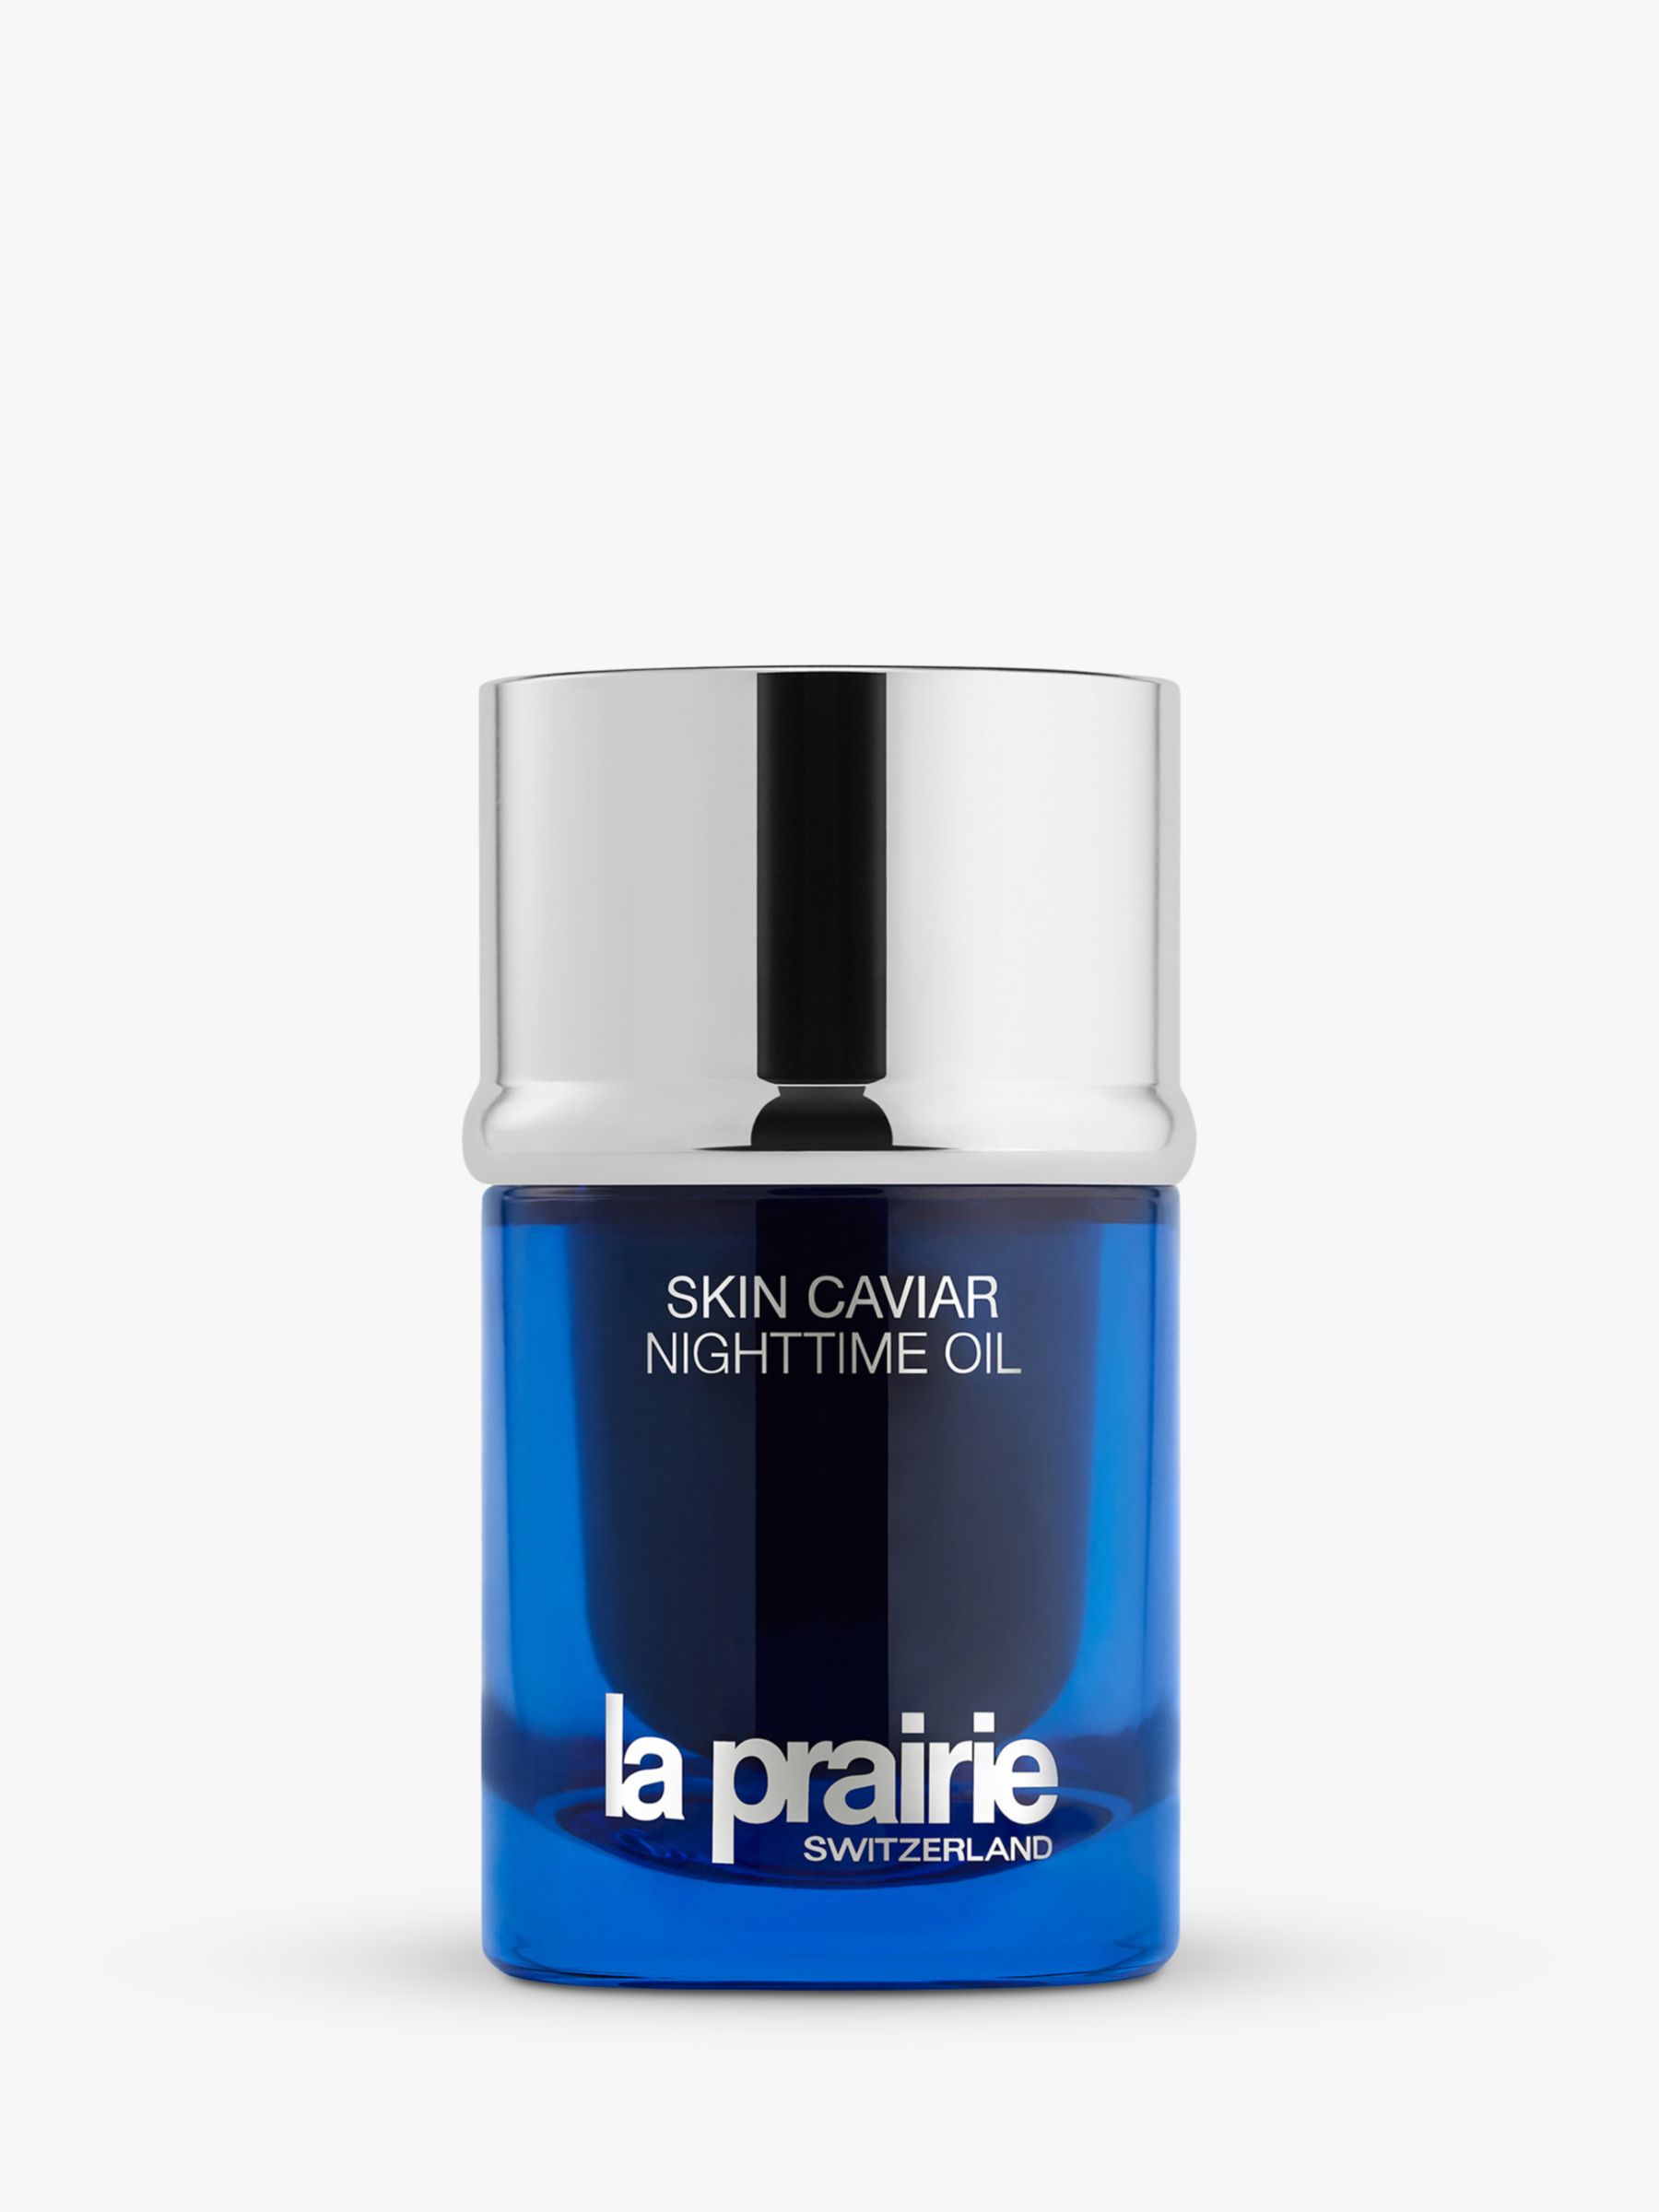 La Prairie Skin Caviar Nighttime Oil with Caviar Retinol, 20ml 1